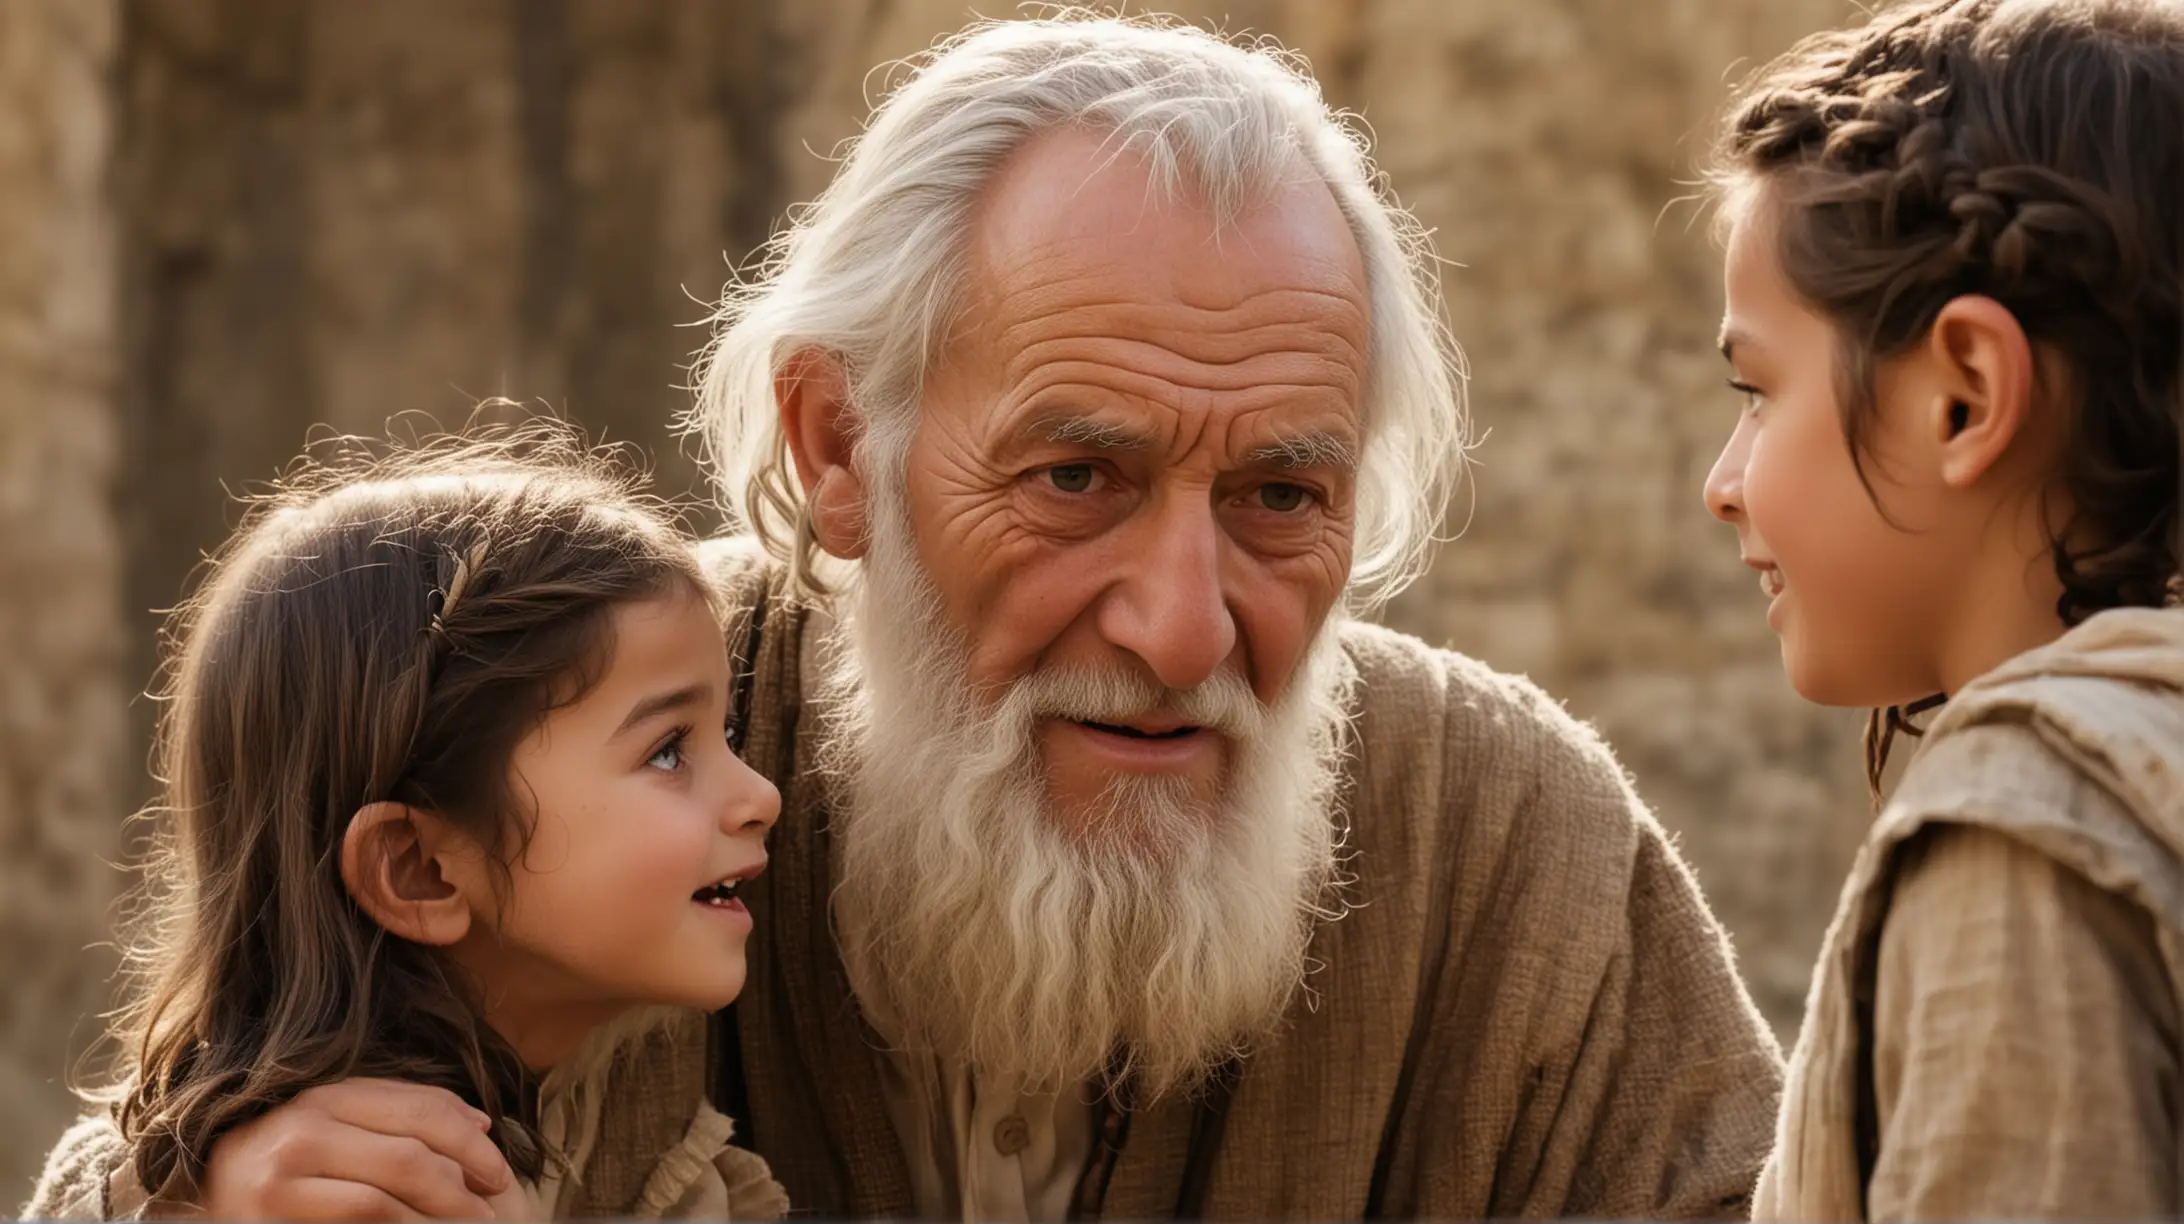 Biblical Era Elderly Man Engaging in Dialogue with Child